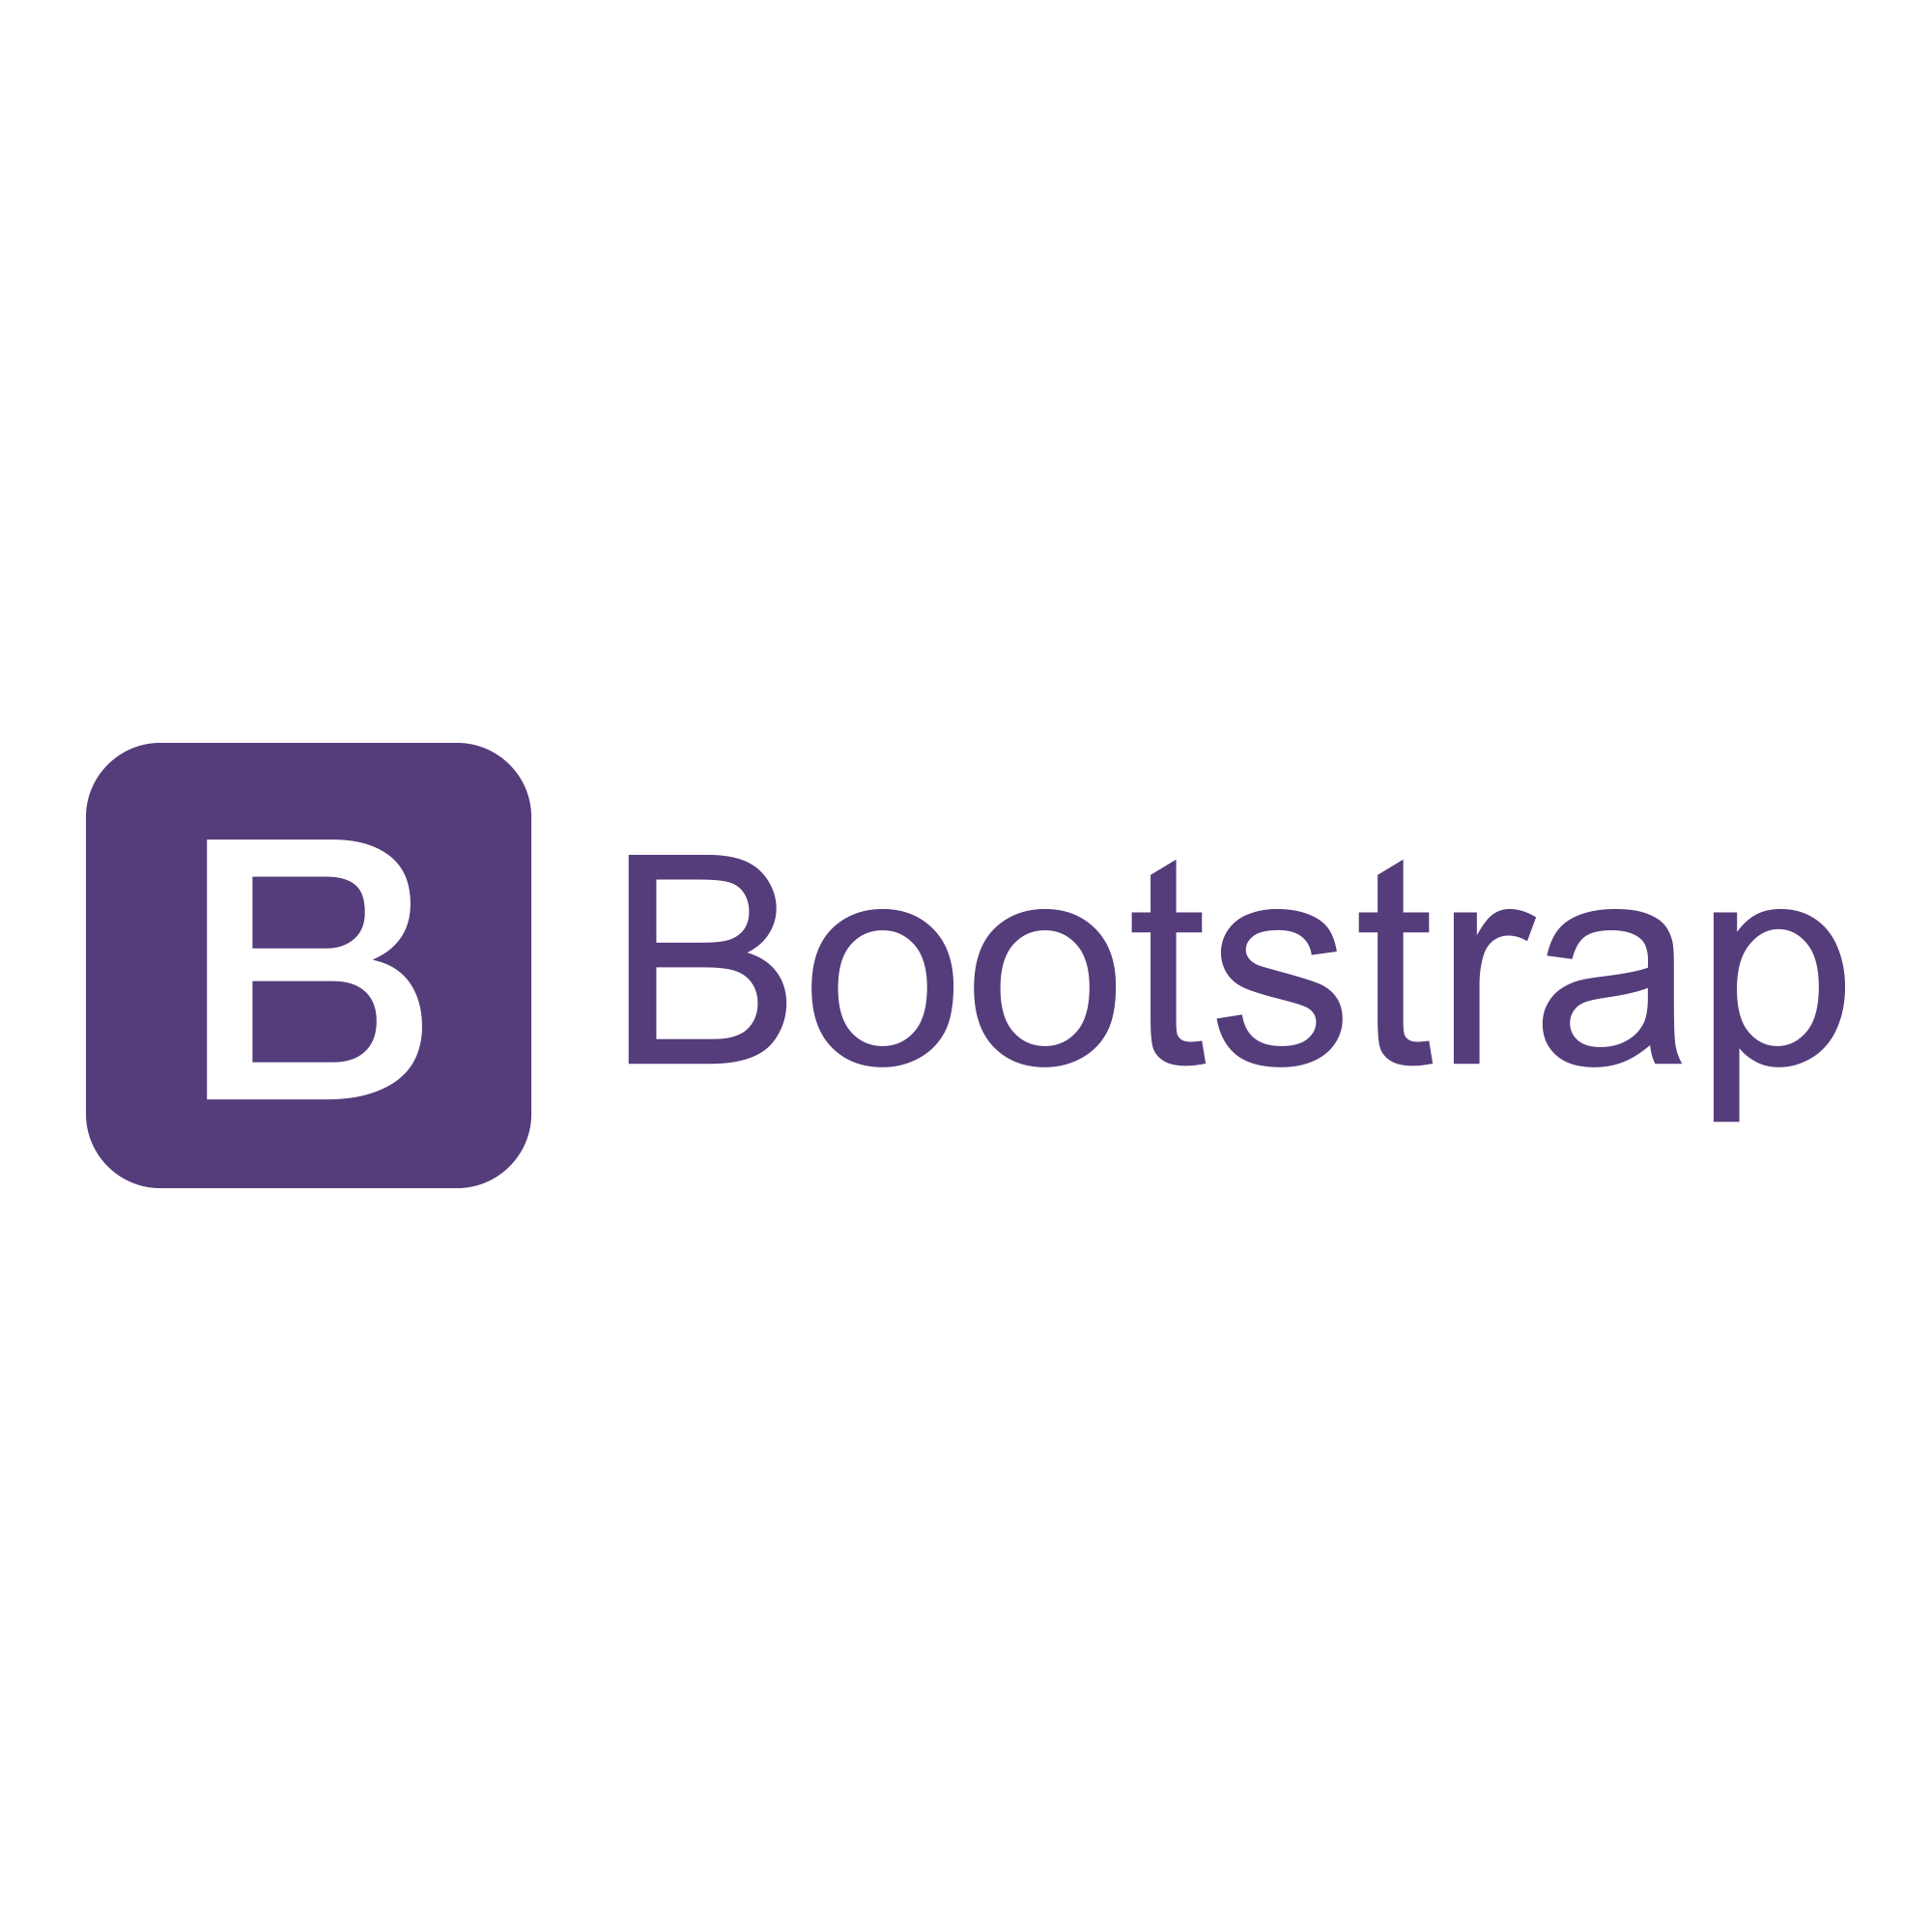 Bootstrap lib. Bootstrap. Картинка Bootstrap. Бутстрап логотип. Логотип Bootstrap PNG.